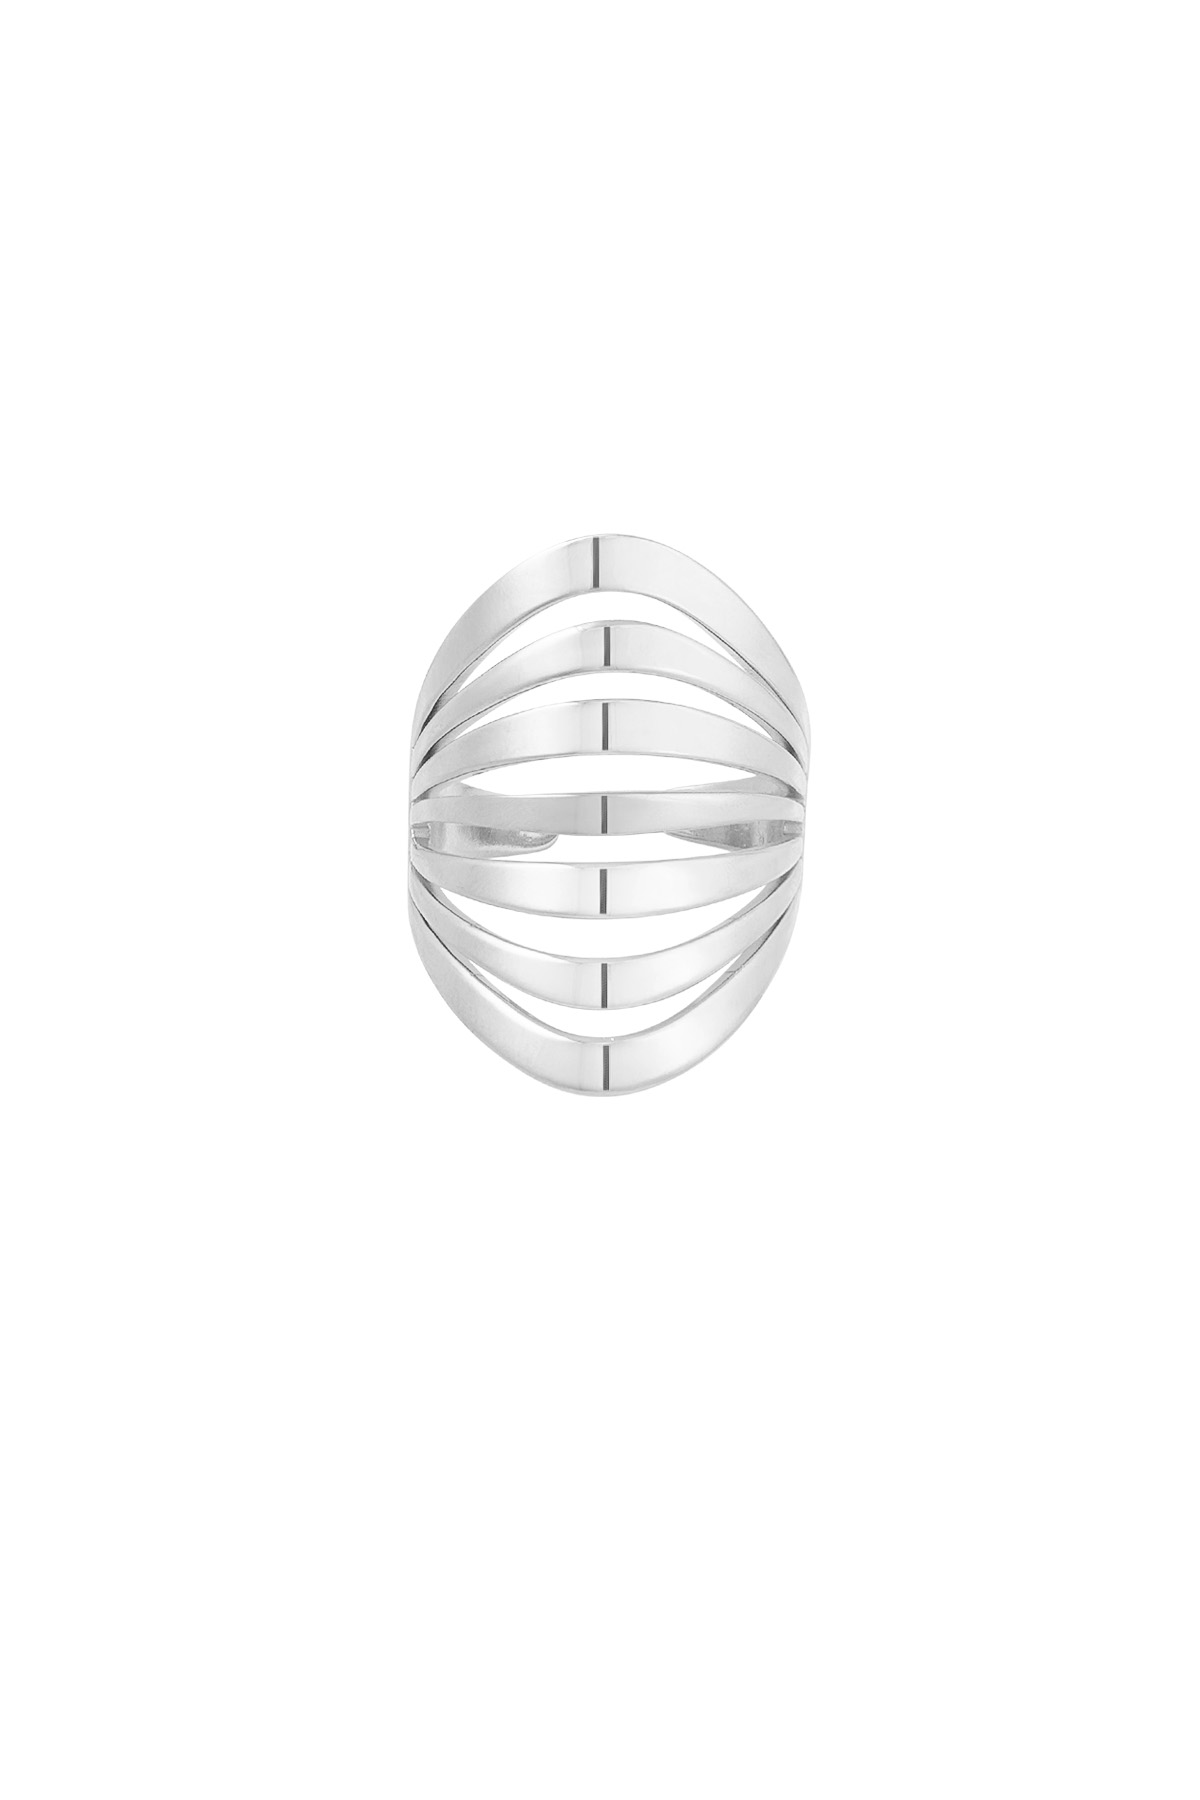 Grote gelaagde ring - zilver h5 